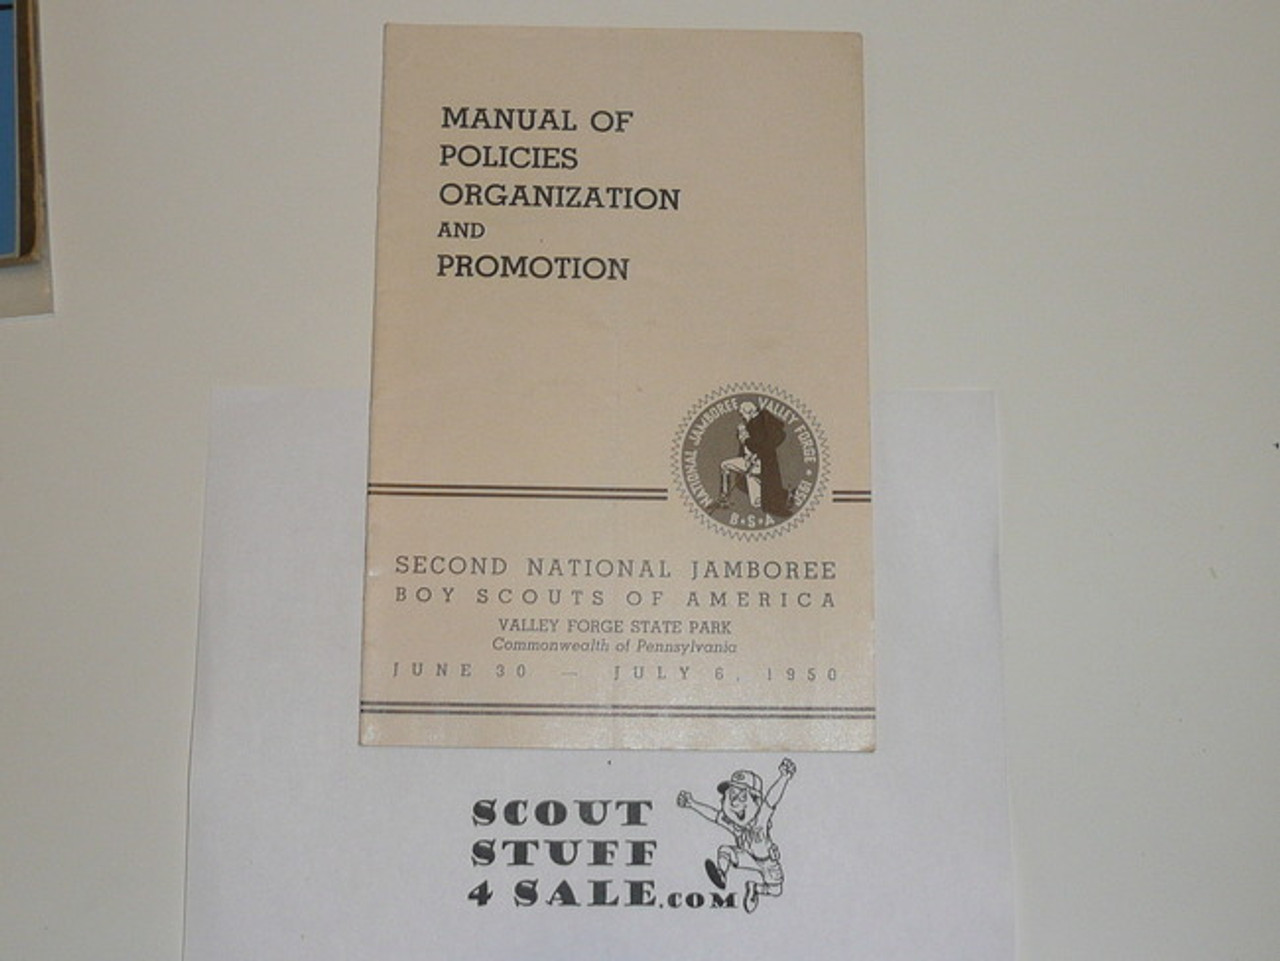 1950 National Jamboree Manual of Policies, Organization, and Promotion